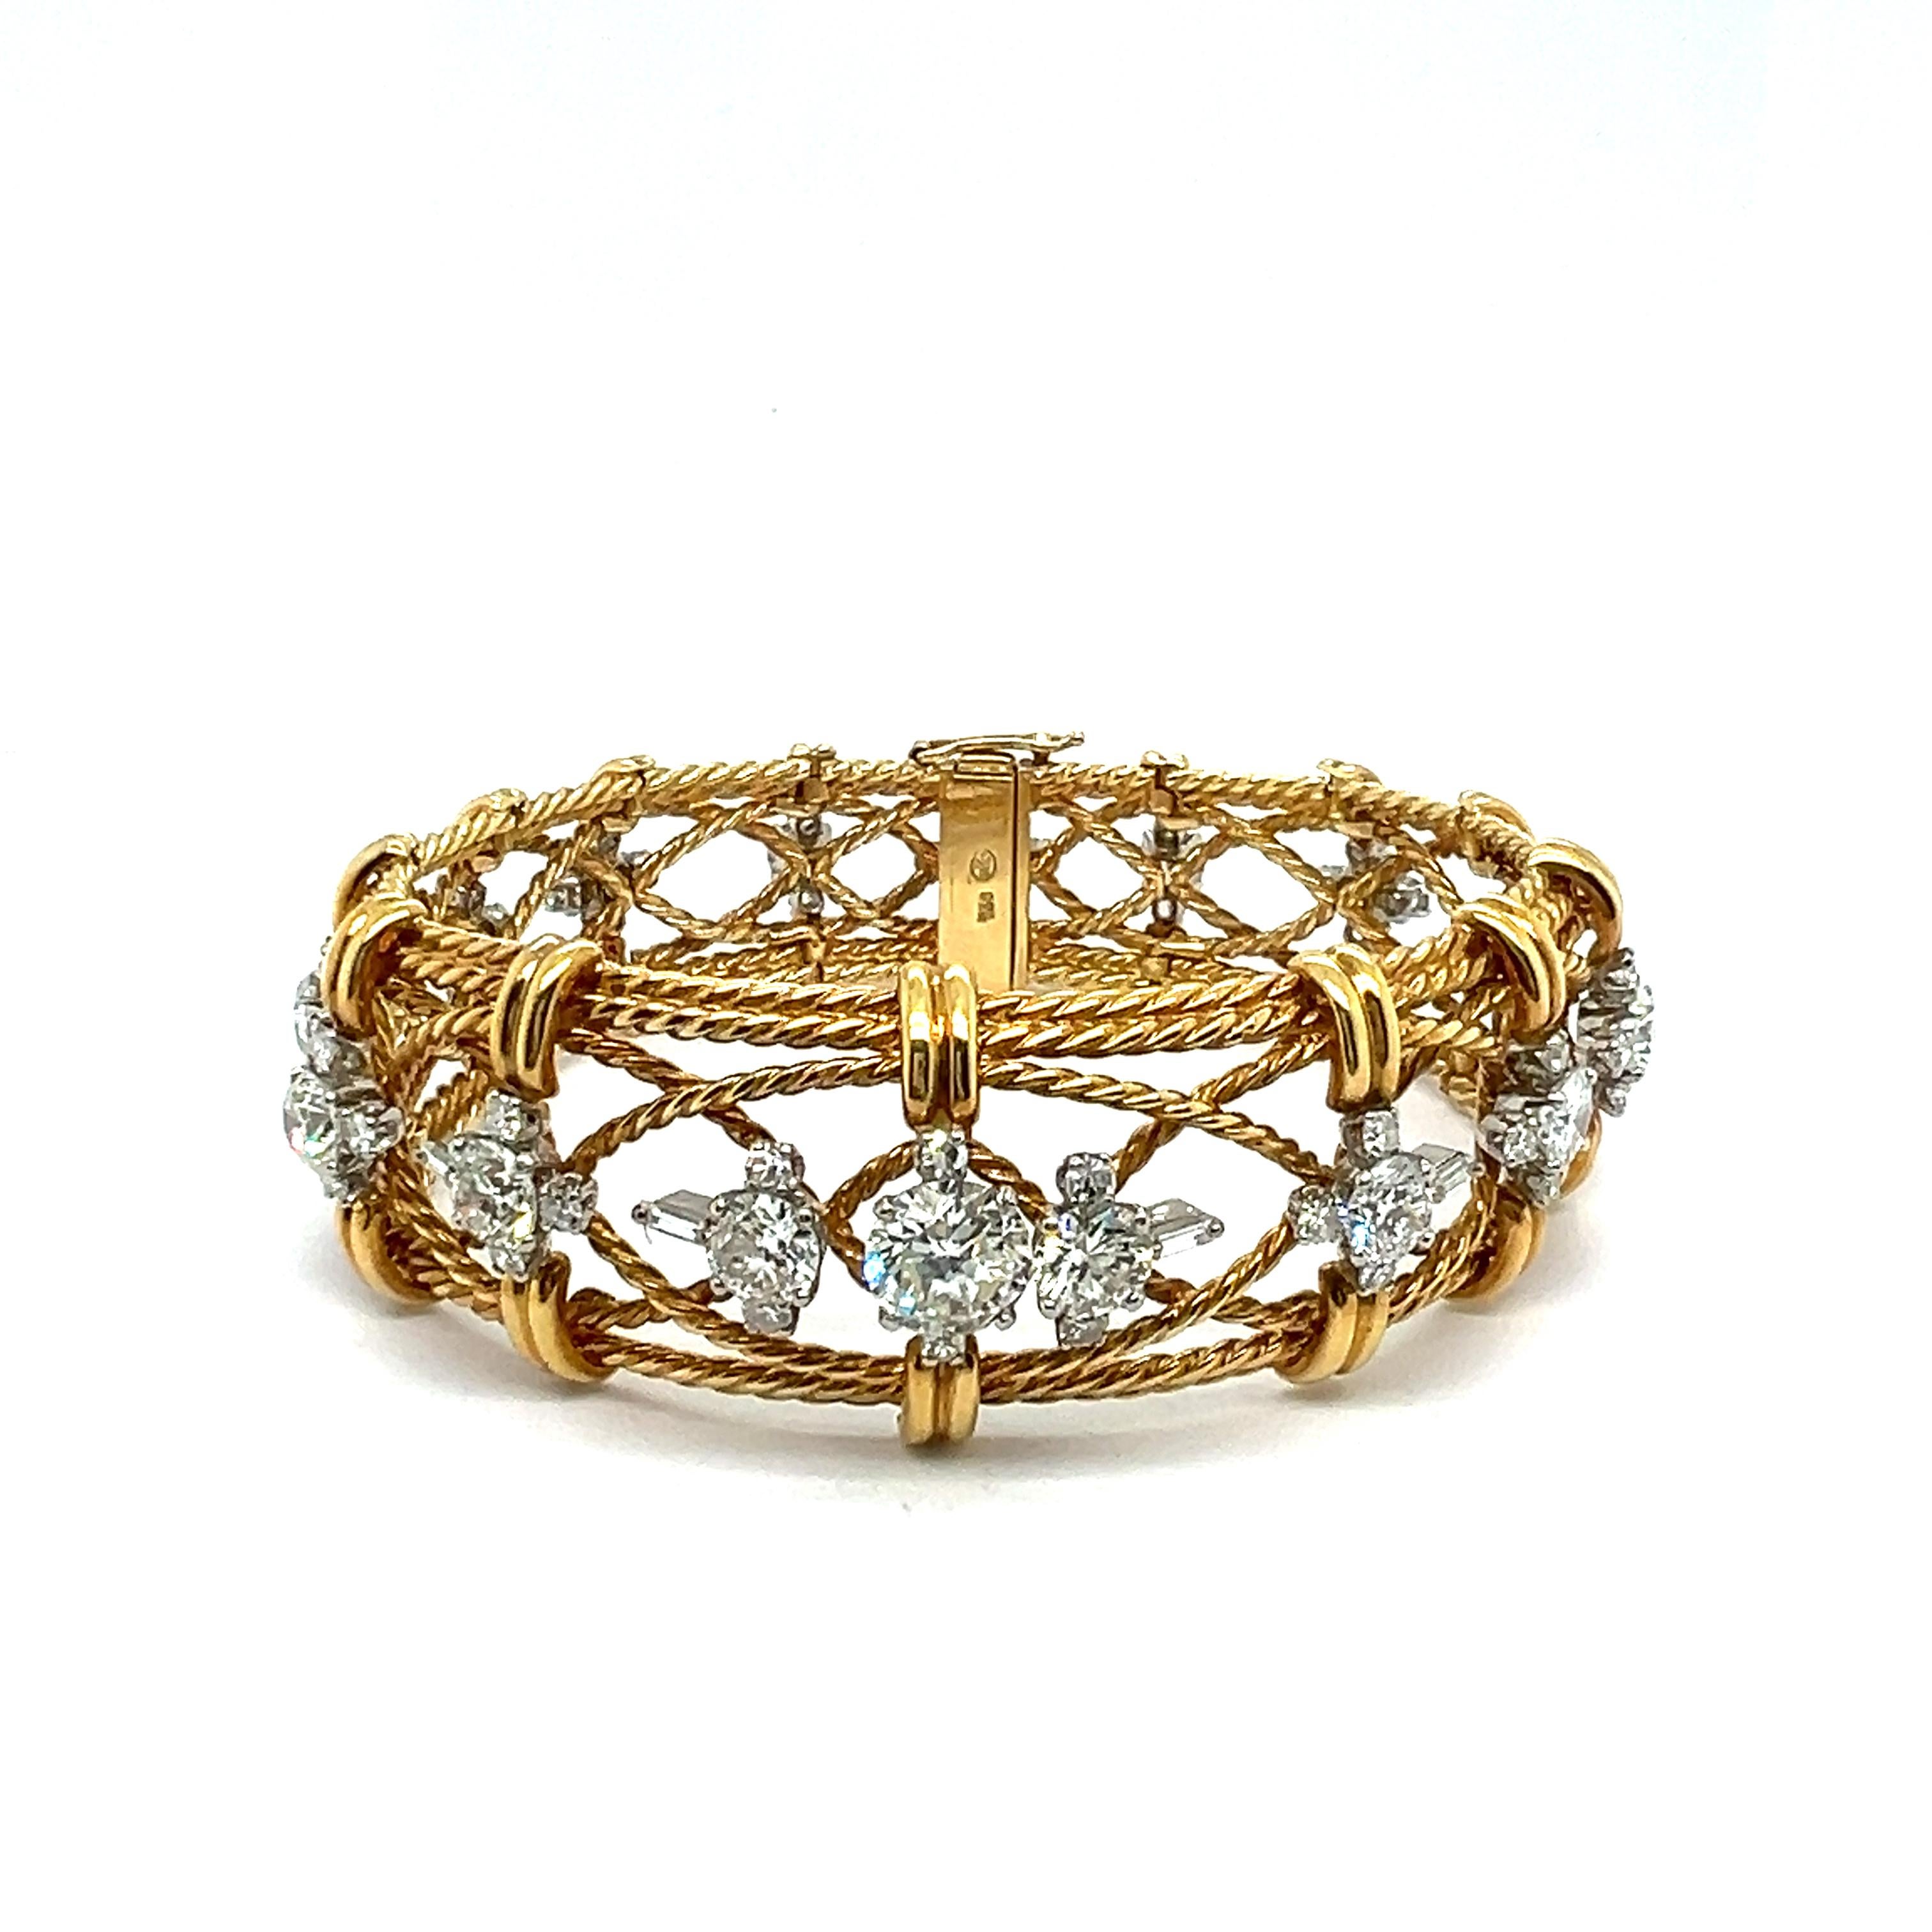 Vintage Bracelet with Diamonds in 18 Karat Gold by Gübelin For Sale 7